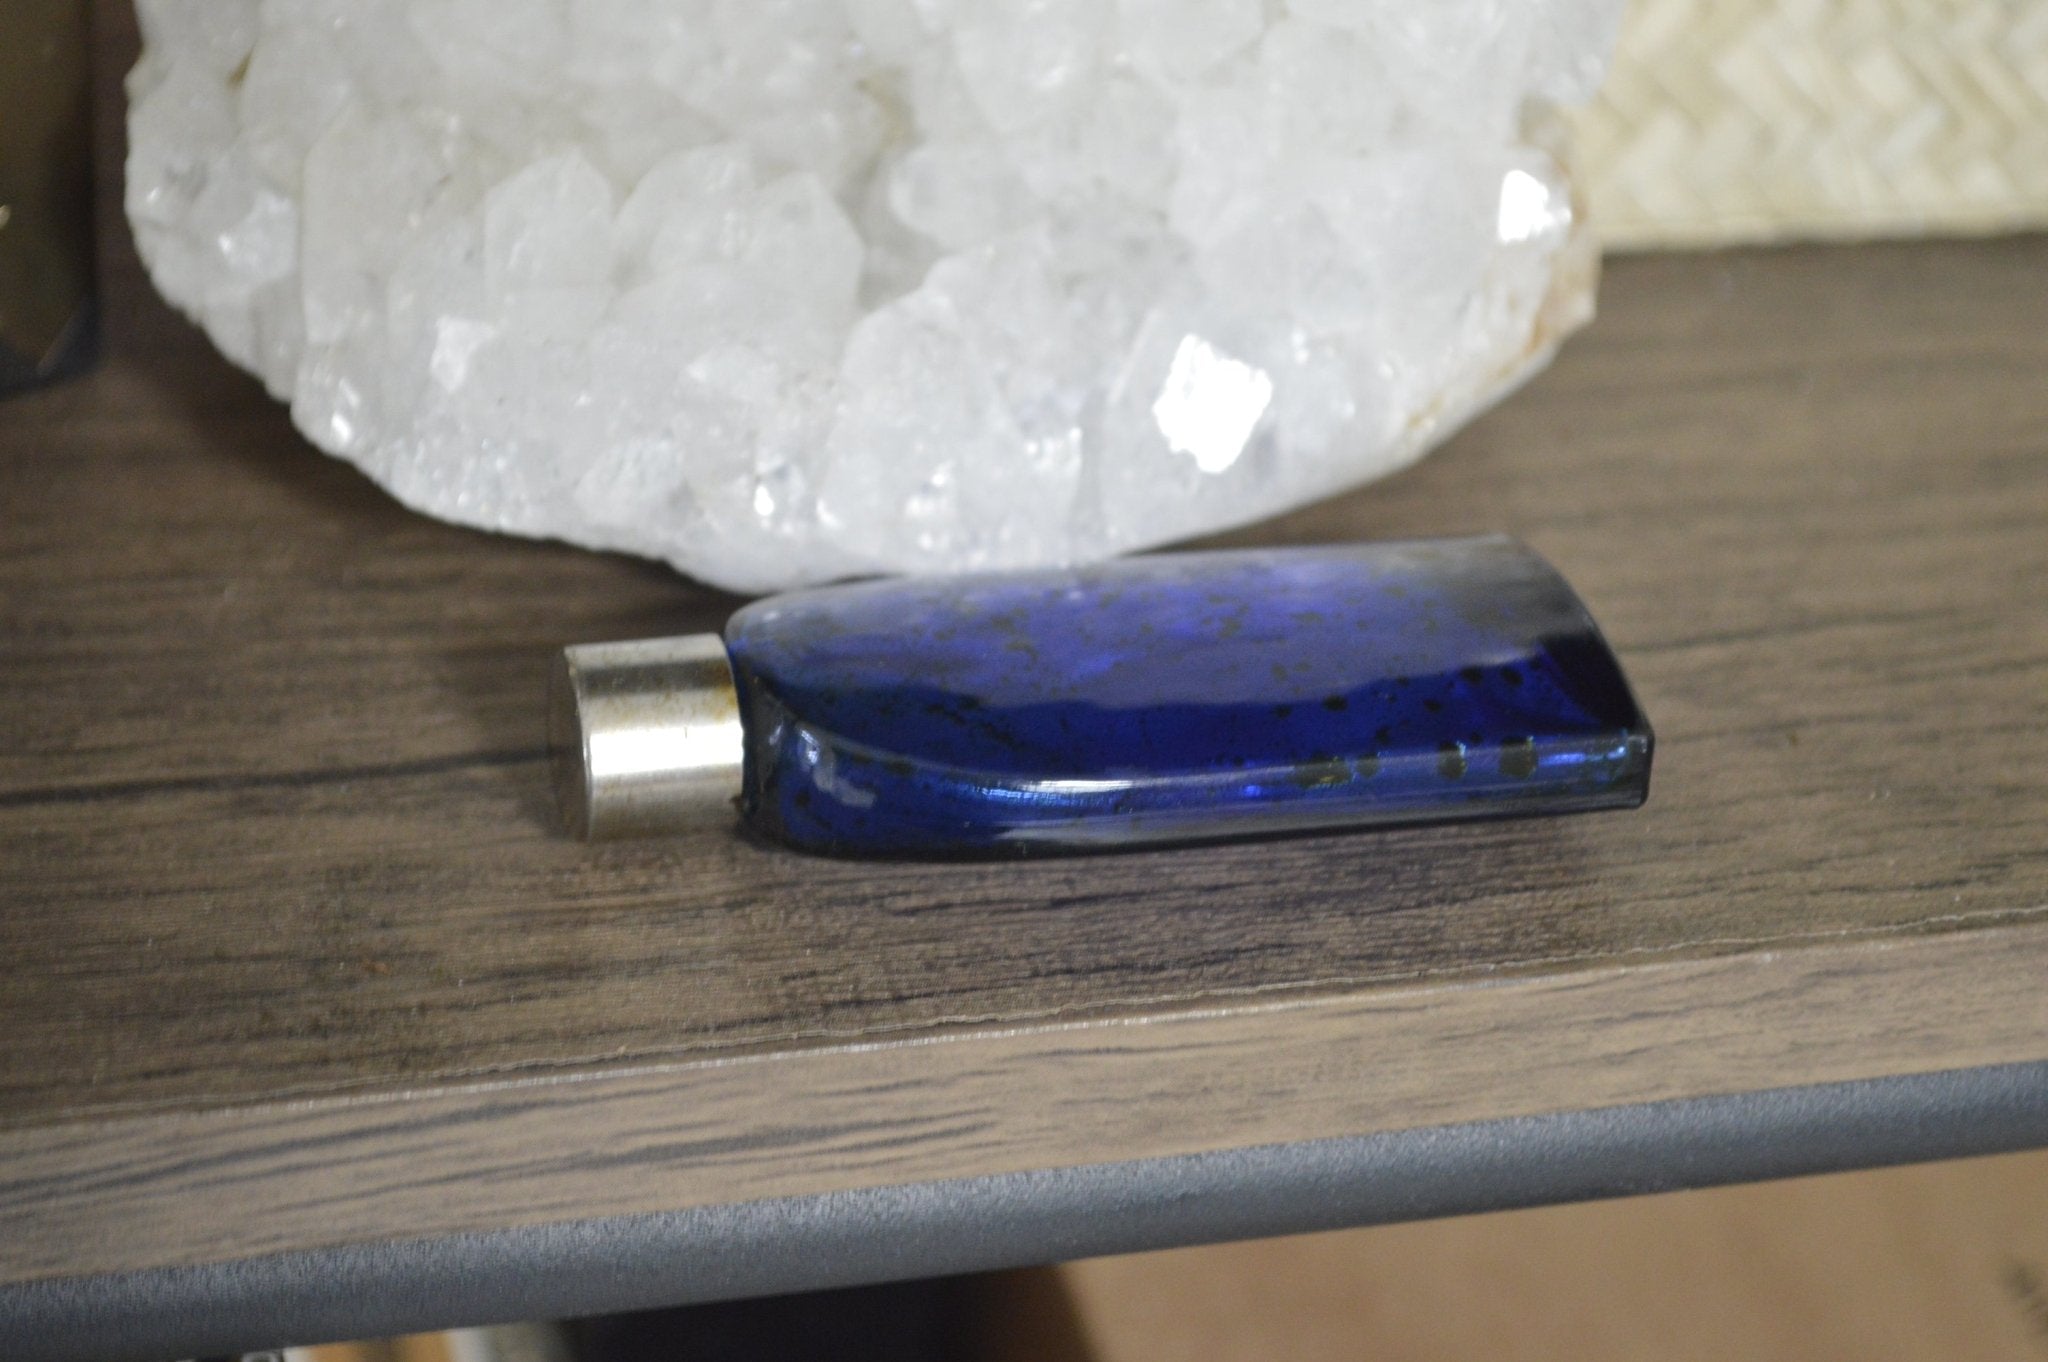 Vintage Perfume Bottle - Blue Glass - We Love Brass